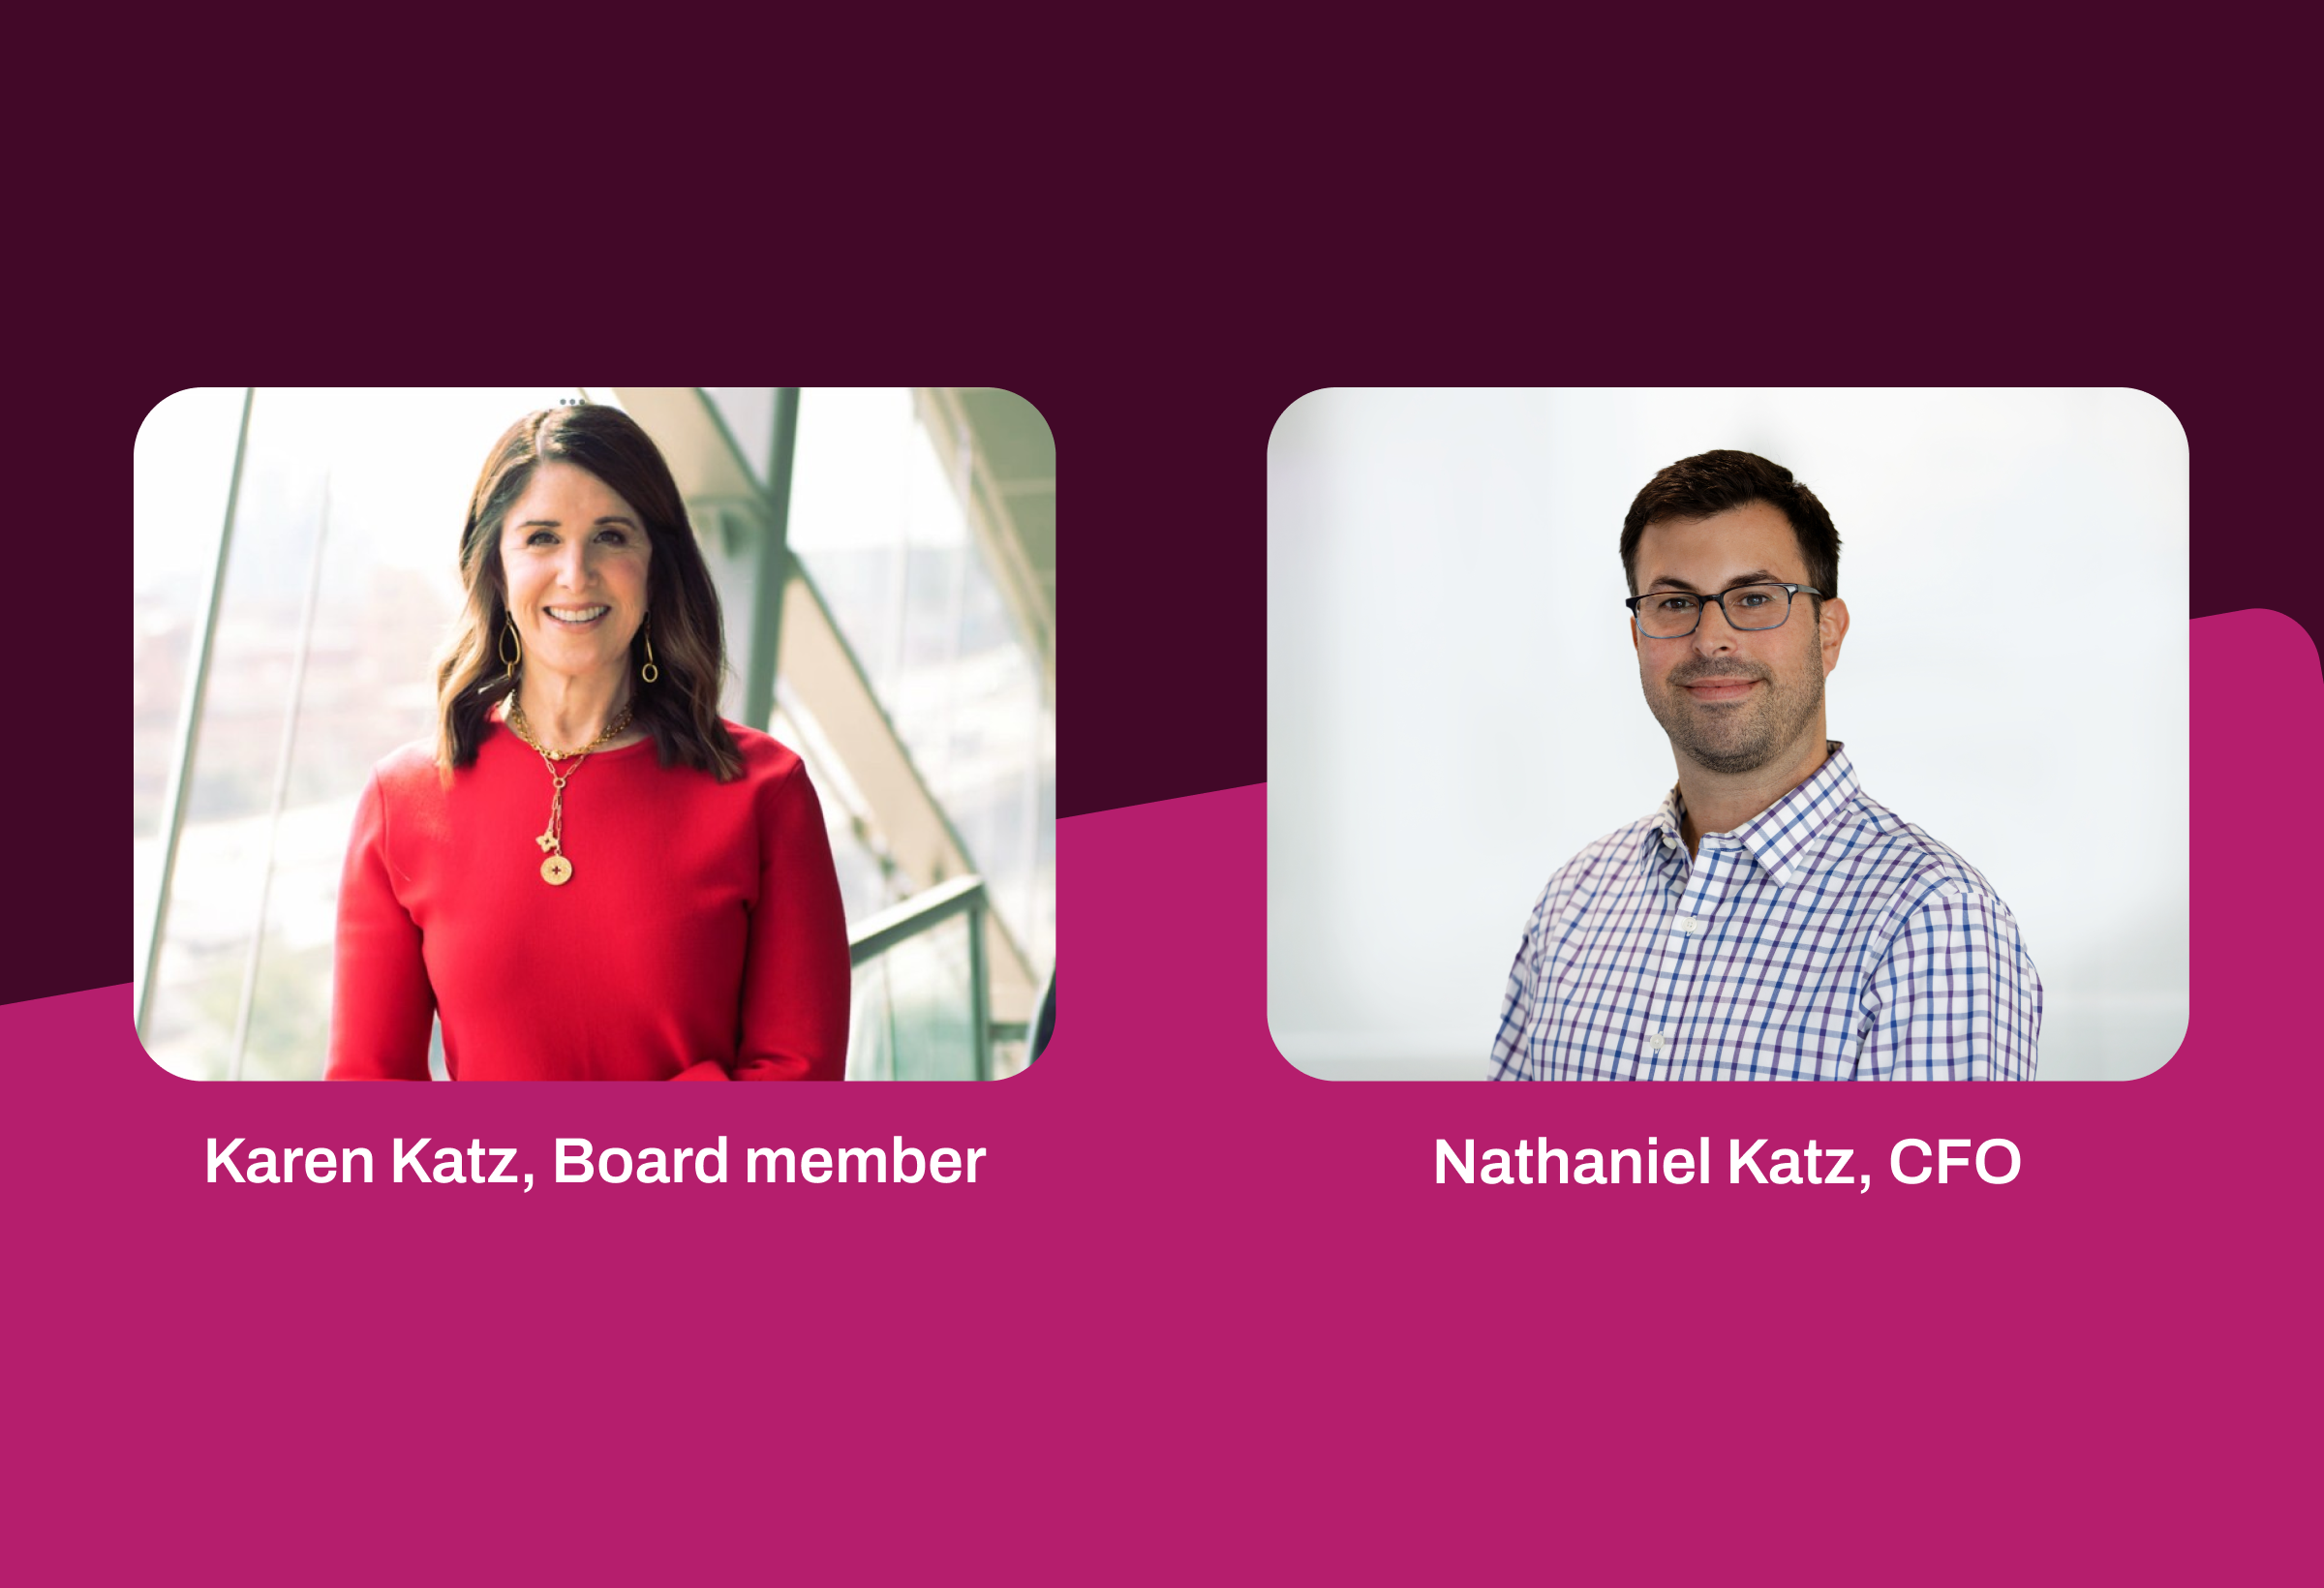 Rokt welcomes new board member Karen Katz and CFO Nathaniel Katz